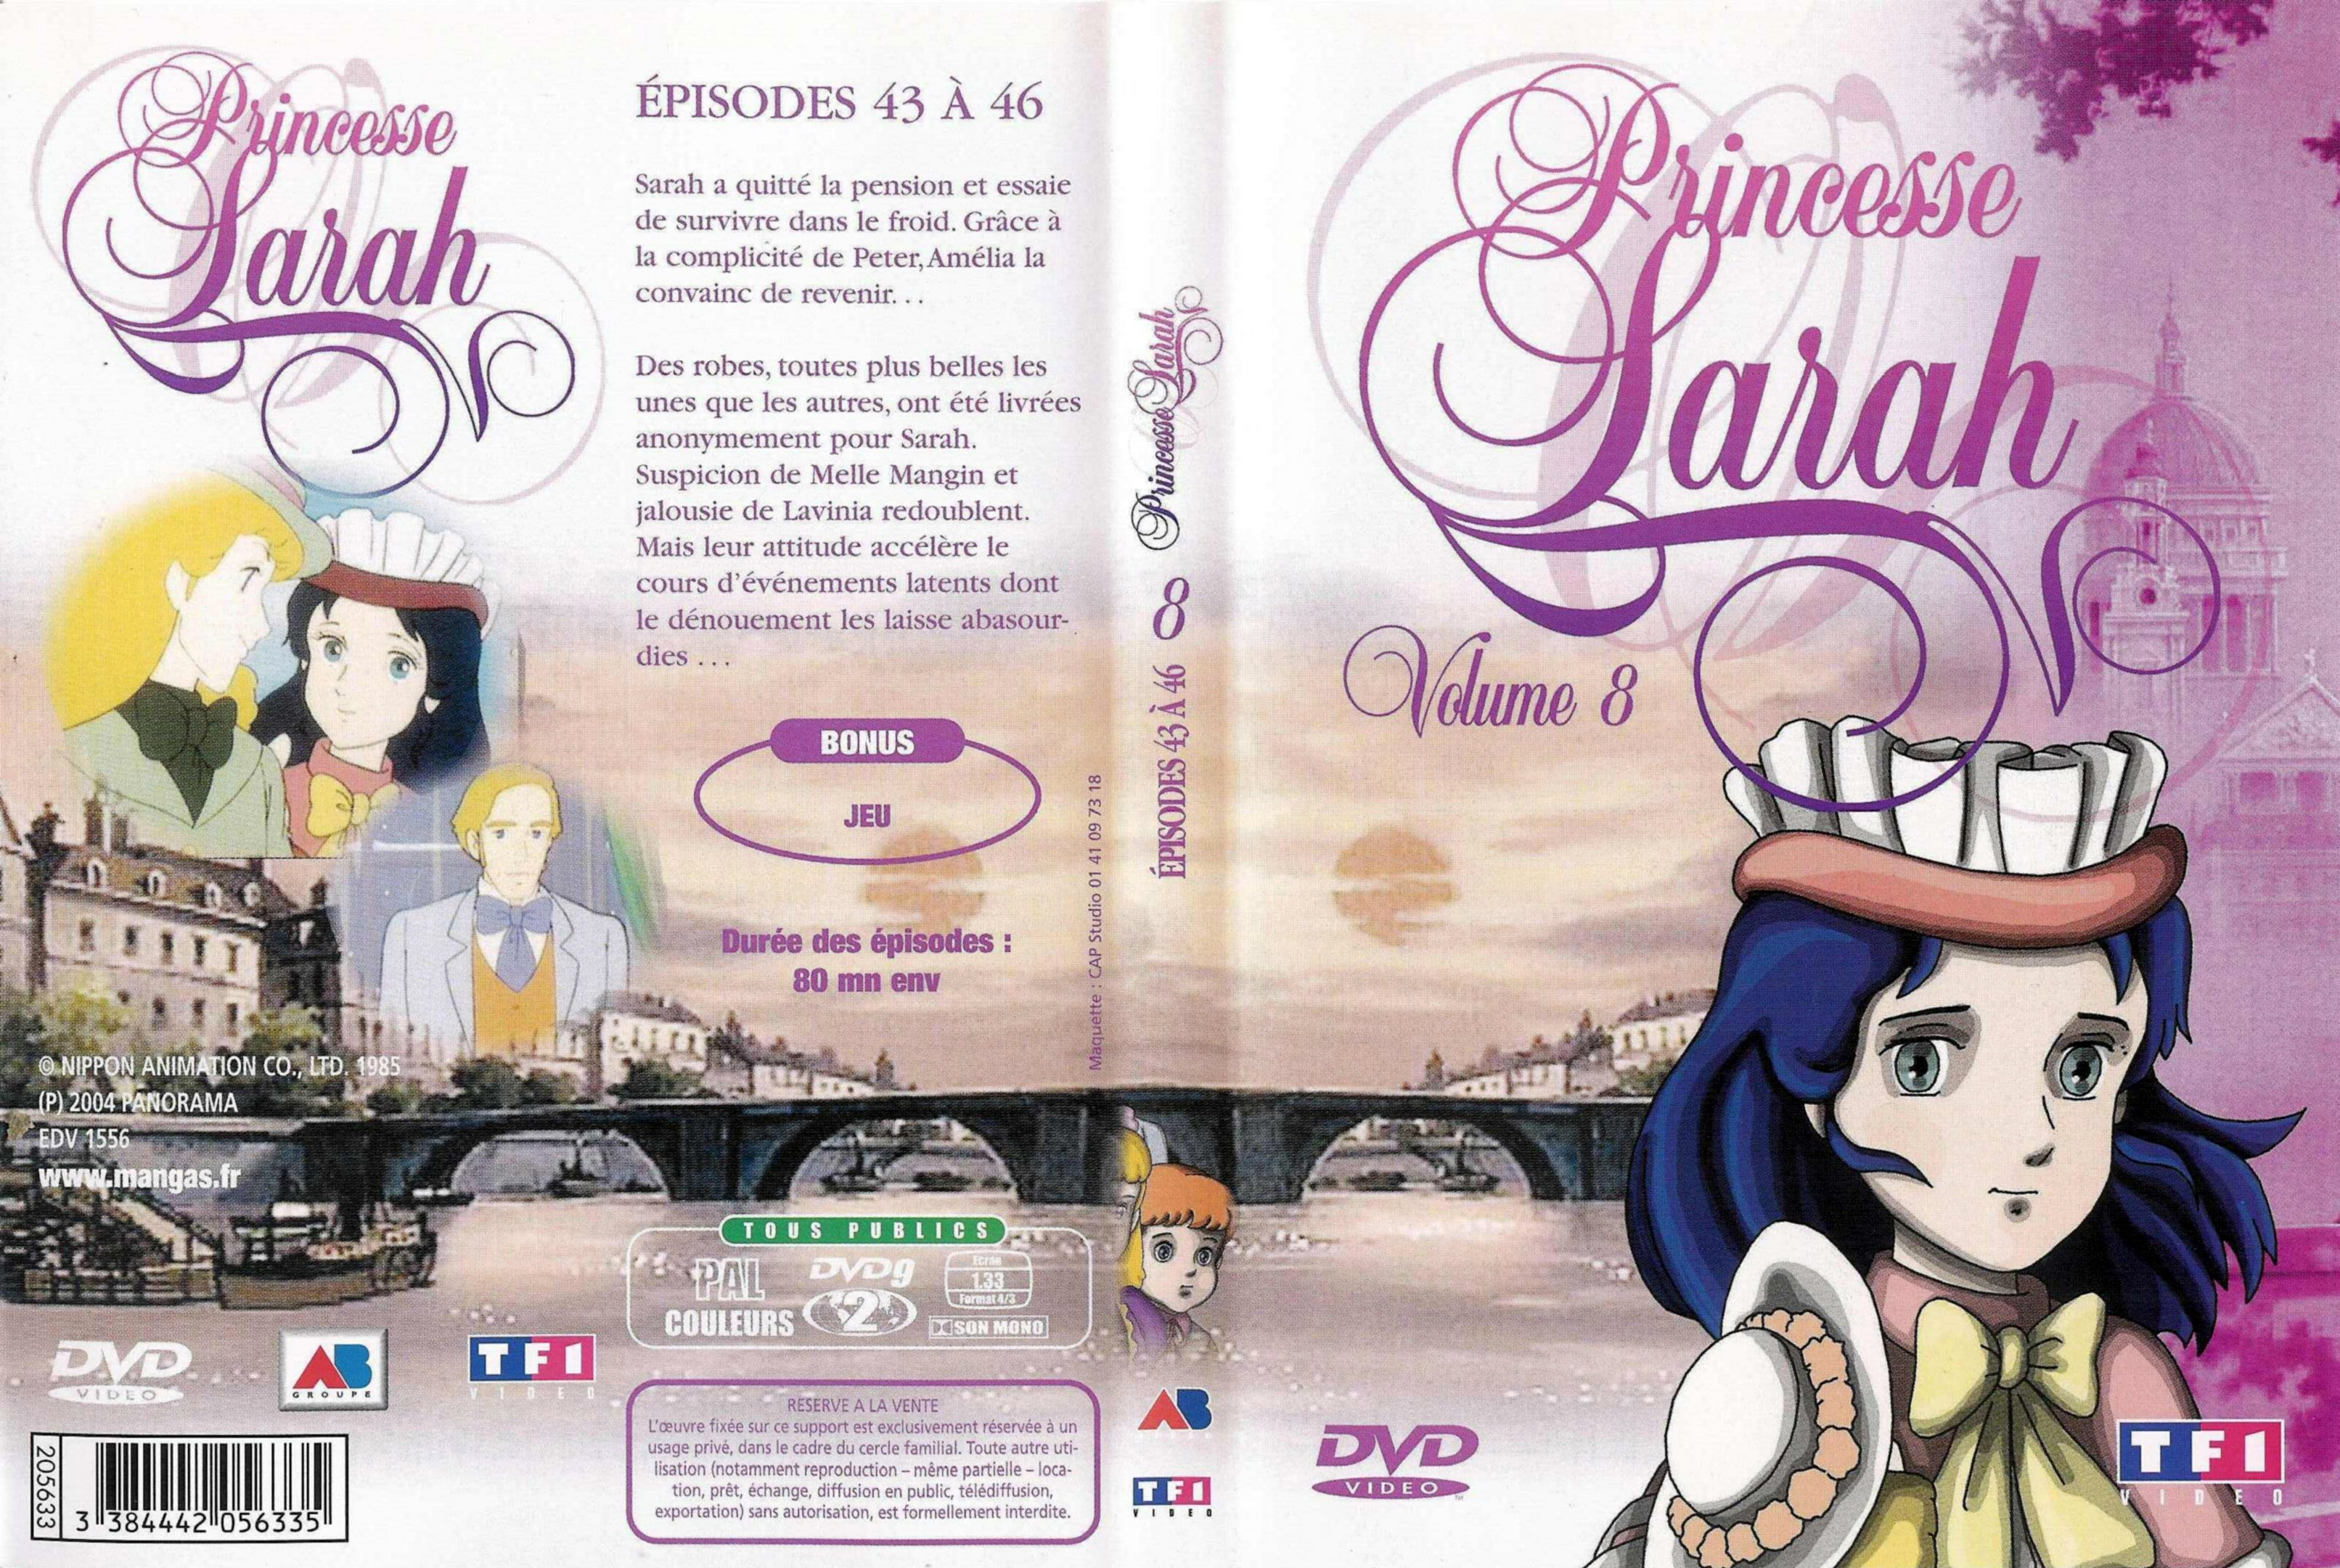 Jaquette DVD Princesse Sarah vol 8